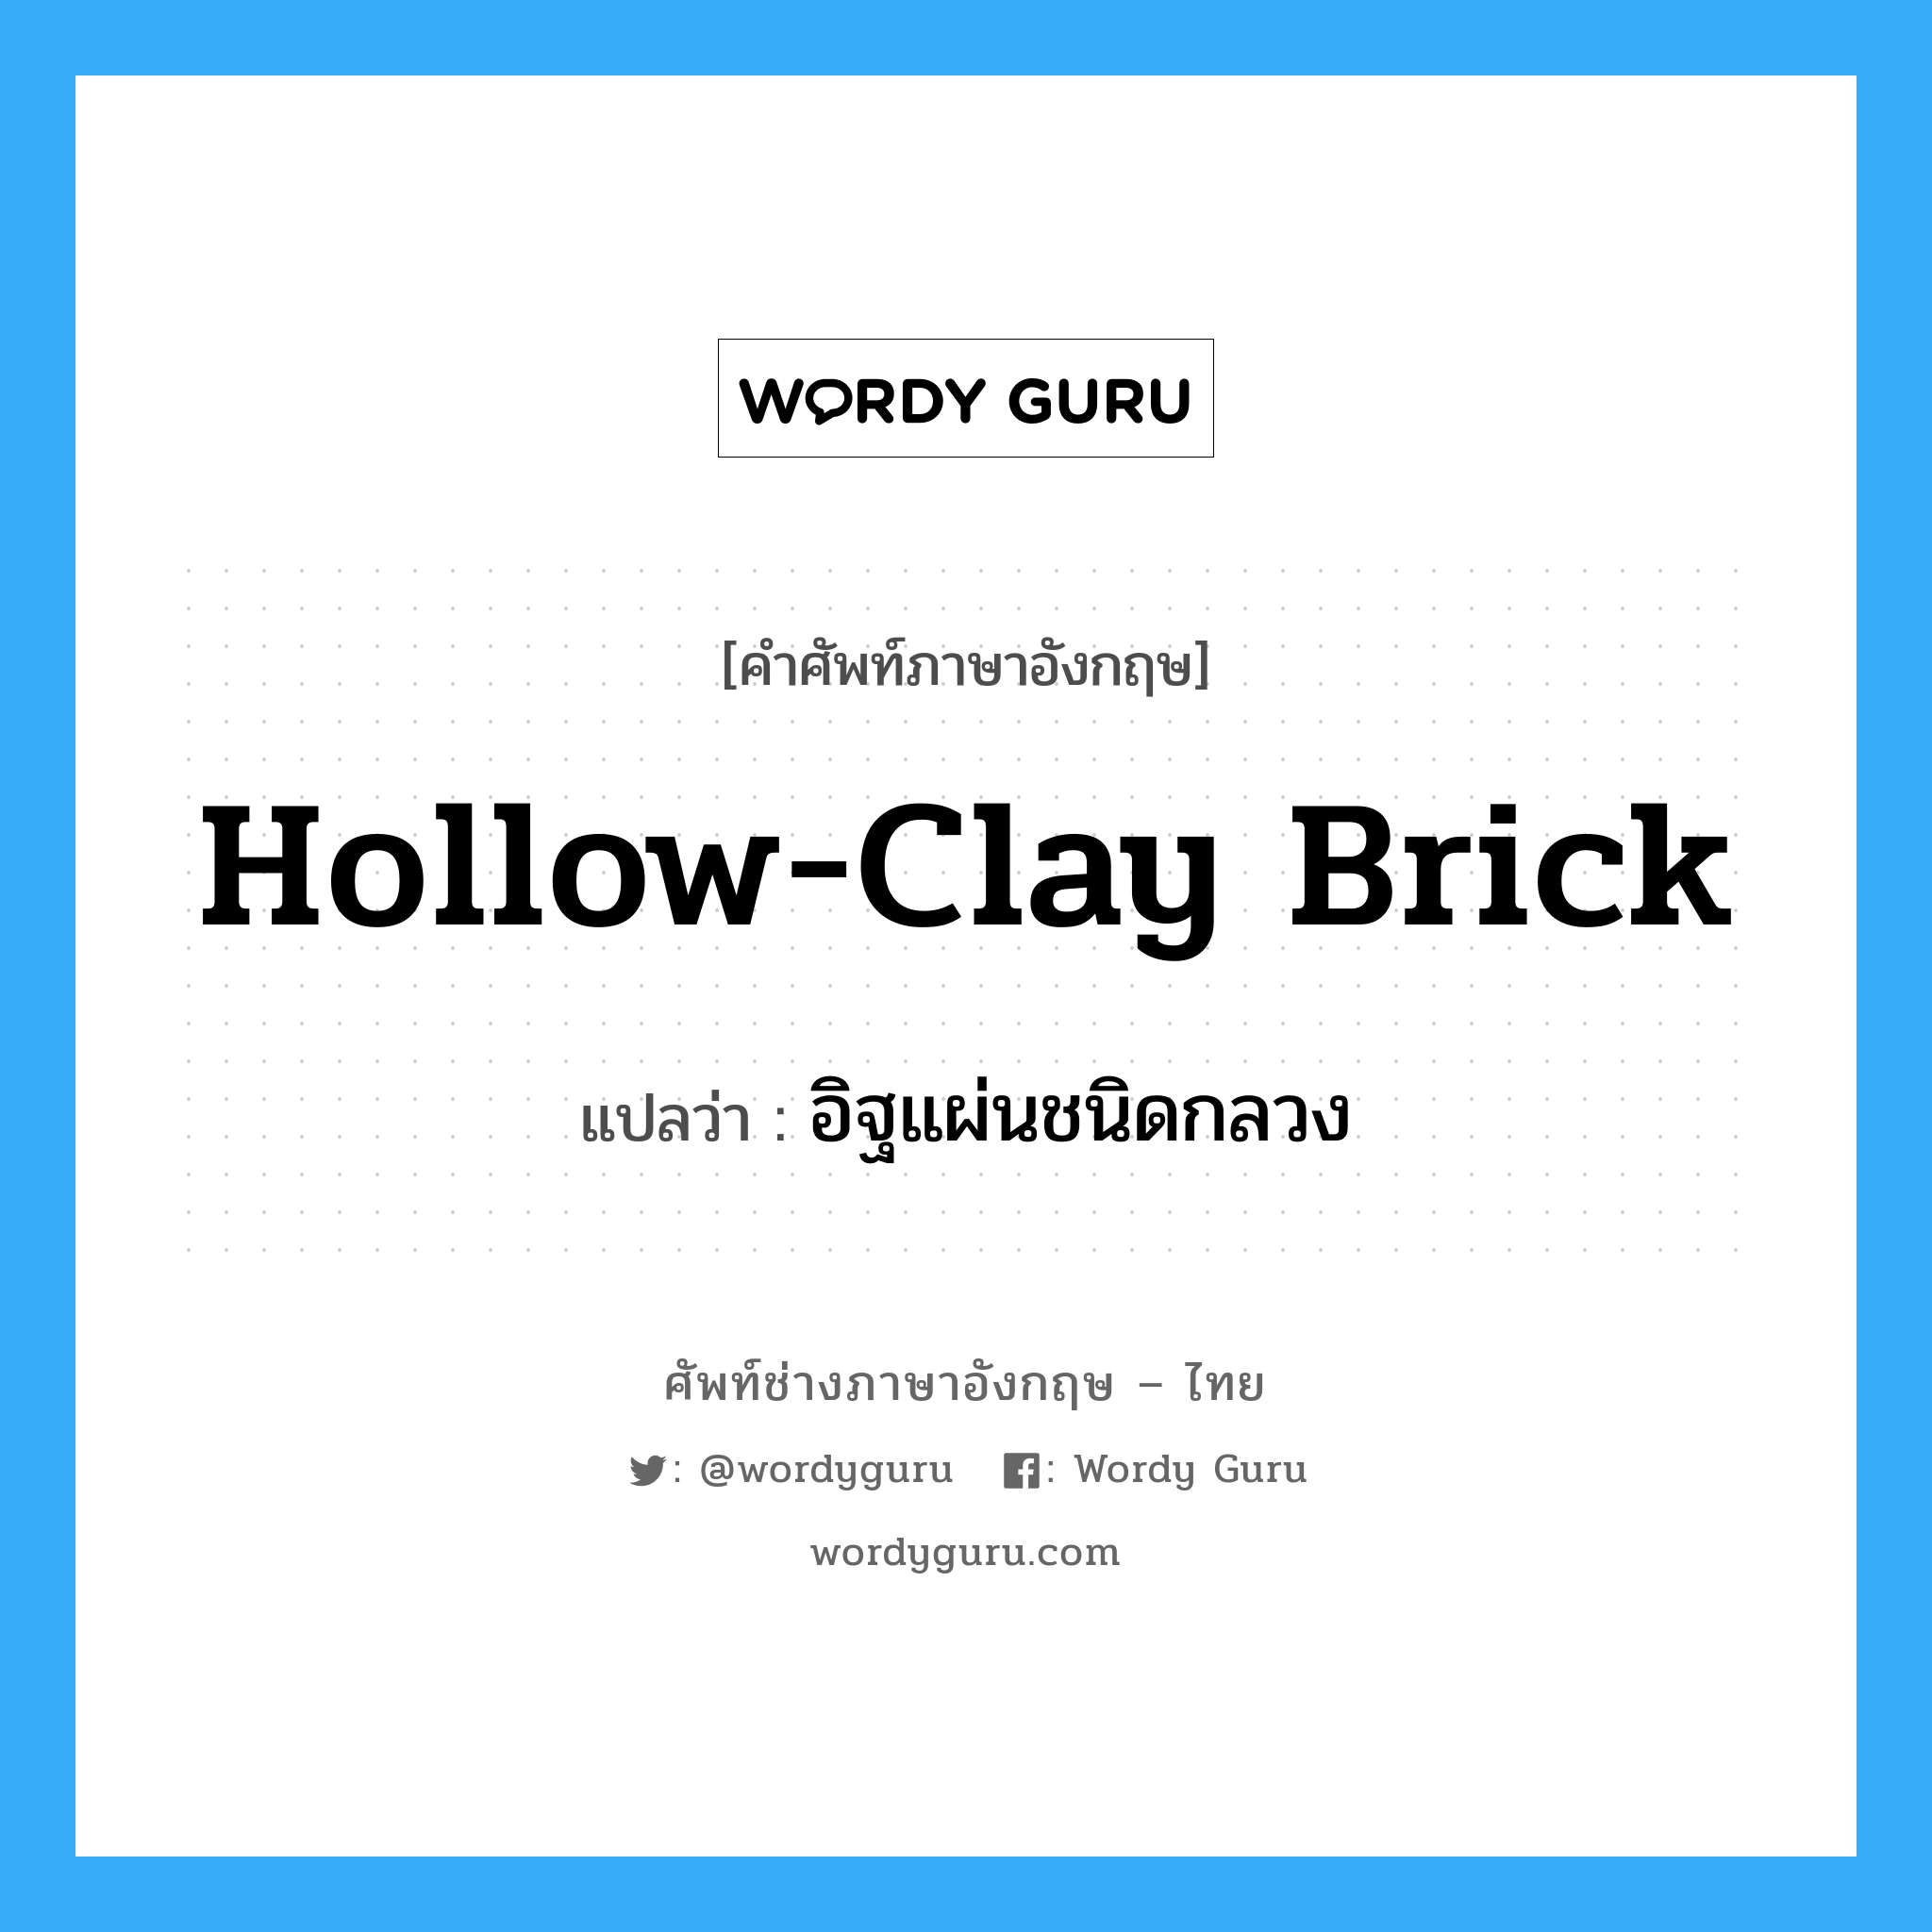 hollow-clay brick แปลว่า?, คำศัพท์ช่างภาษาอังกฤษ - ไทย hollow-clay brick คำศัพท์ภาษาอังกฤษ hollow-clay brick แปลว่า อิฐแผ่นชนิดกลวง